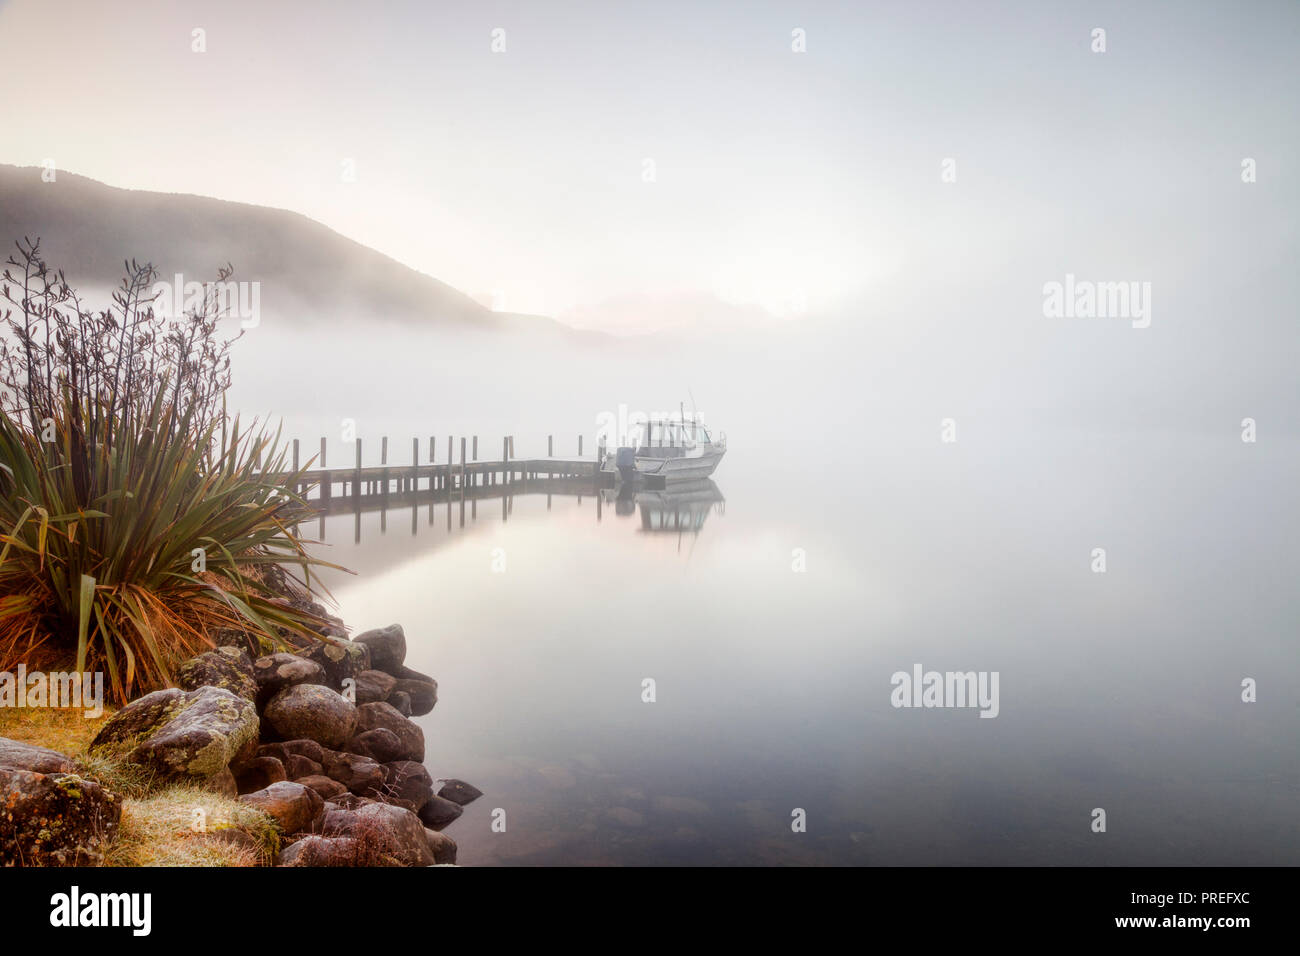 A colde and foggy morning at Lake Rotoroa, Nelson Lakes National Park, New Zealand. Stock Photo